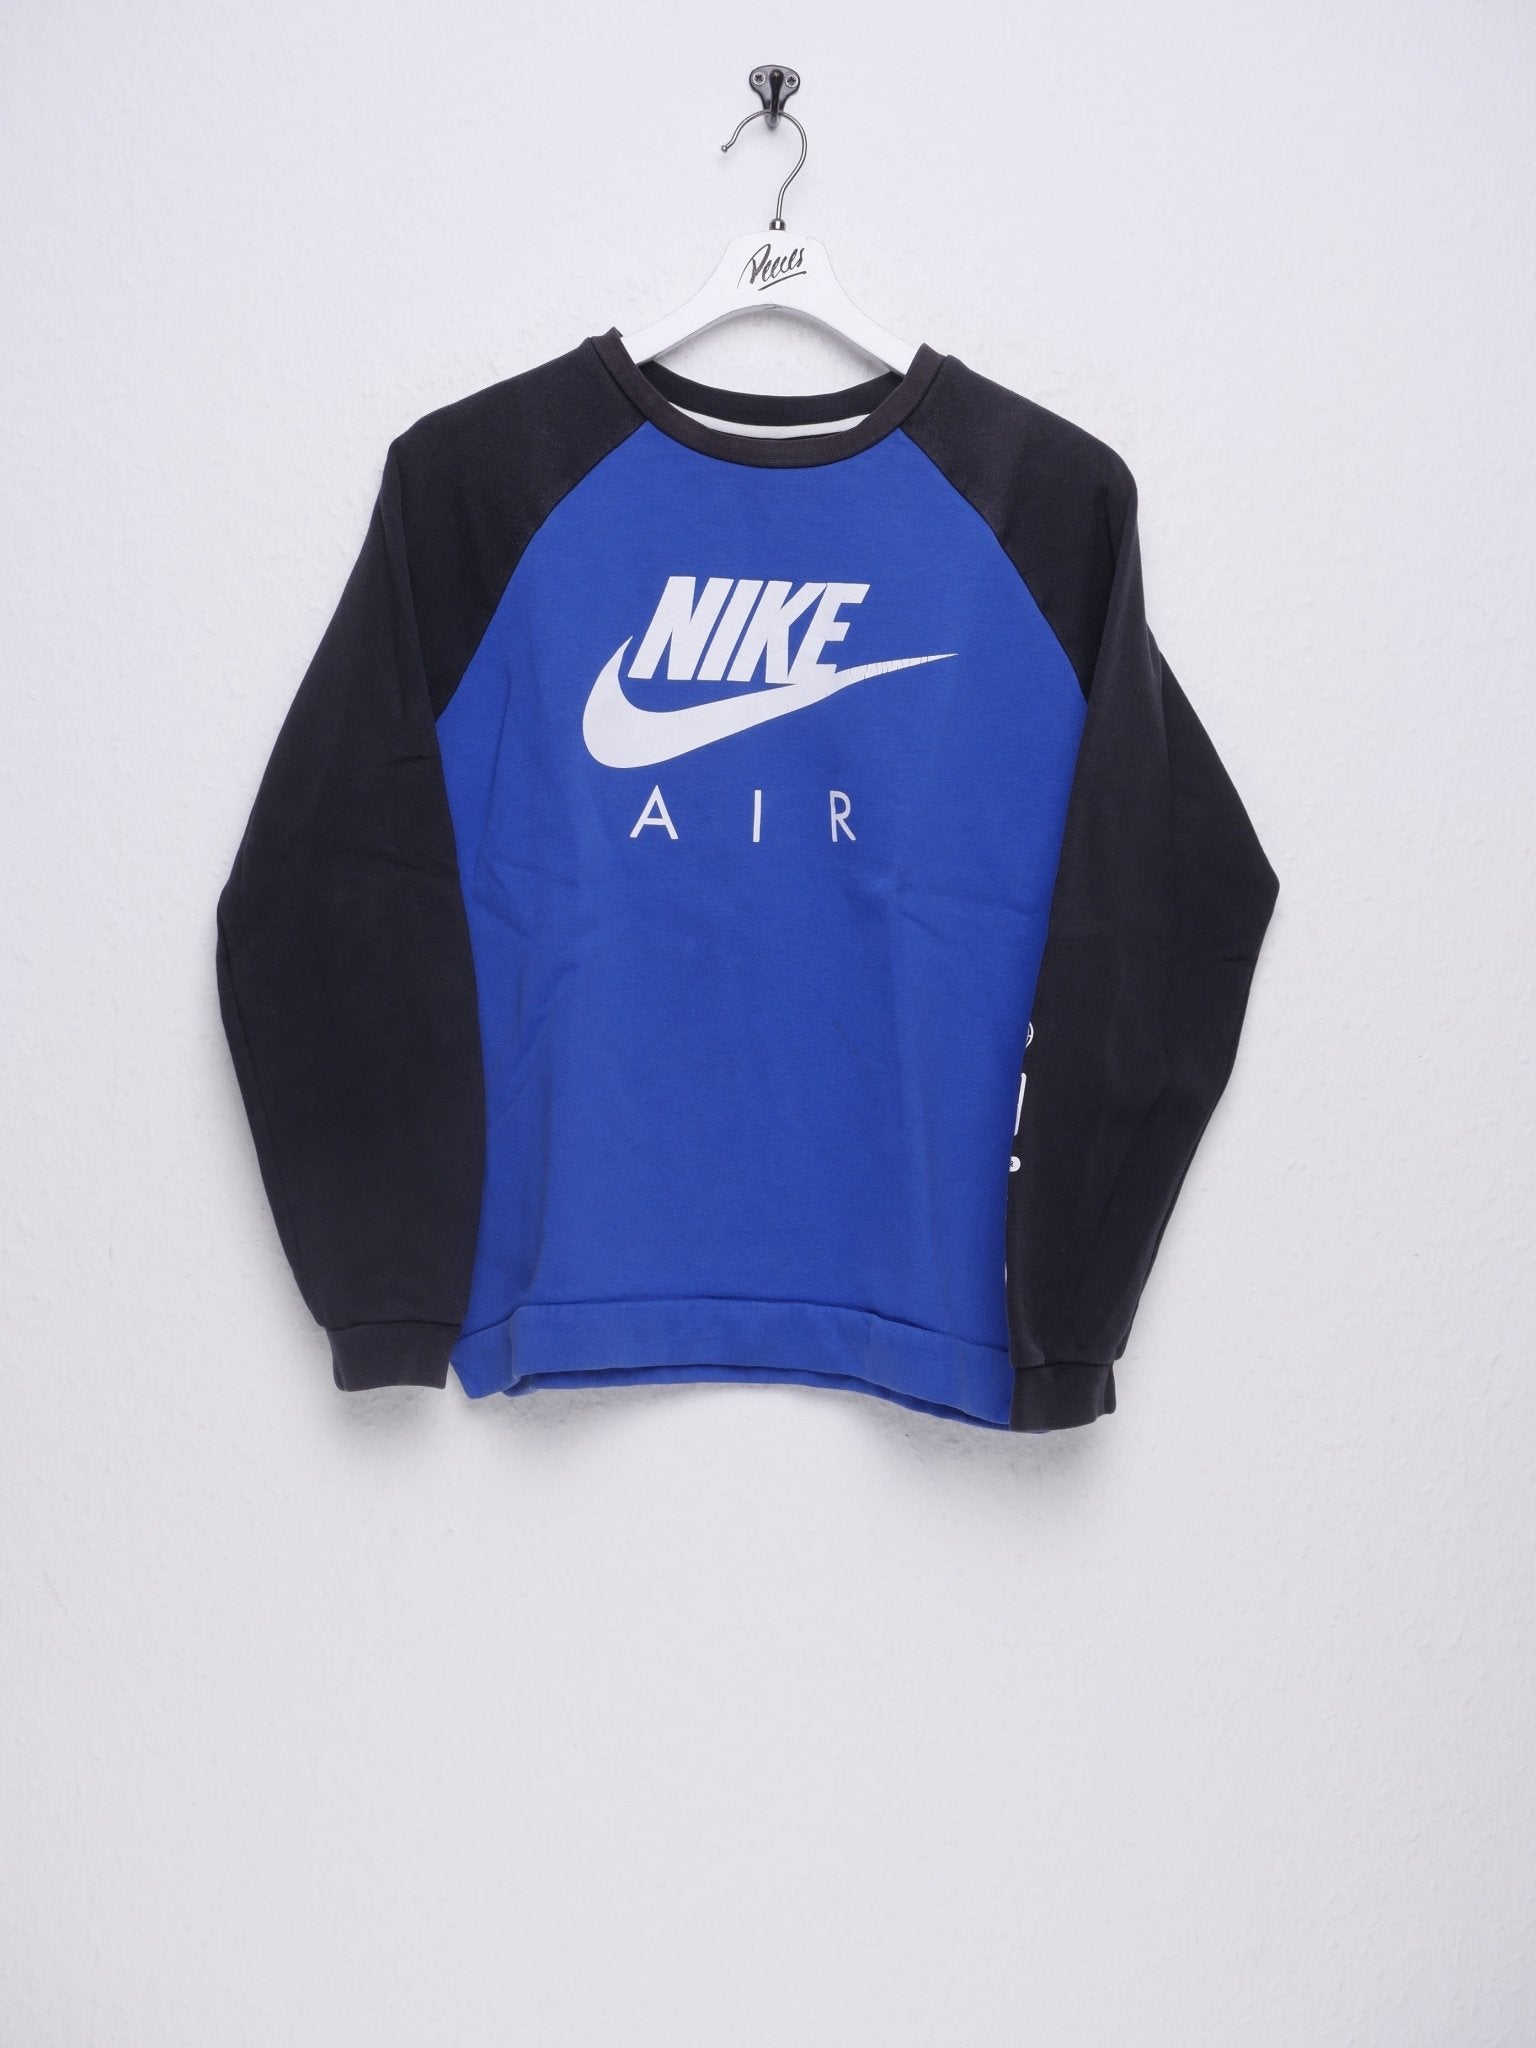 Nike Air printed Logo two toned Sweater - Peeces